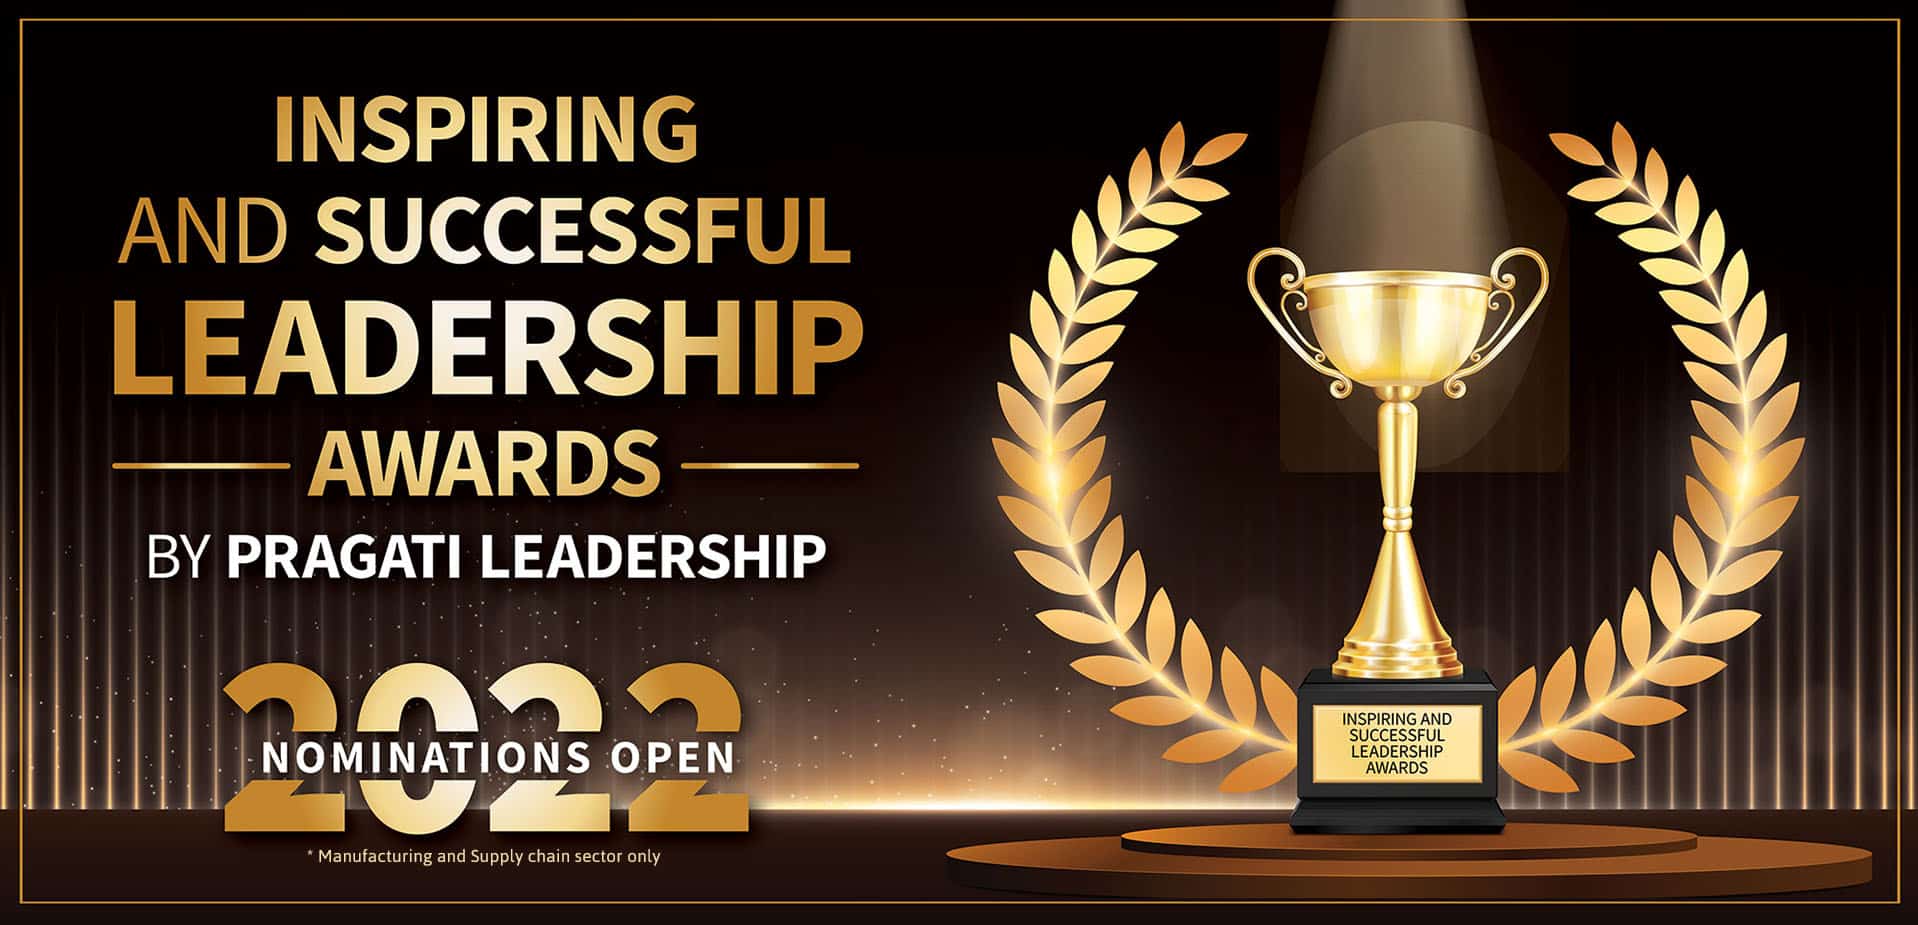 Pragati Leadership Inspiring & Successful Leadership Awards 2022– The Red Carpet has been Laid